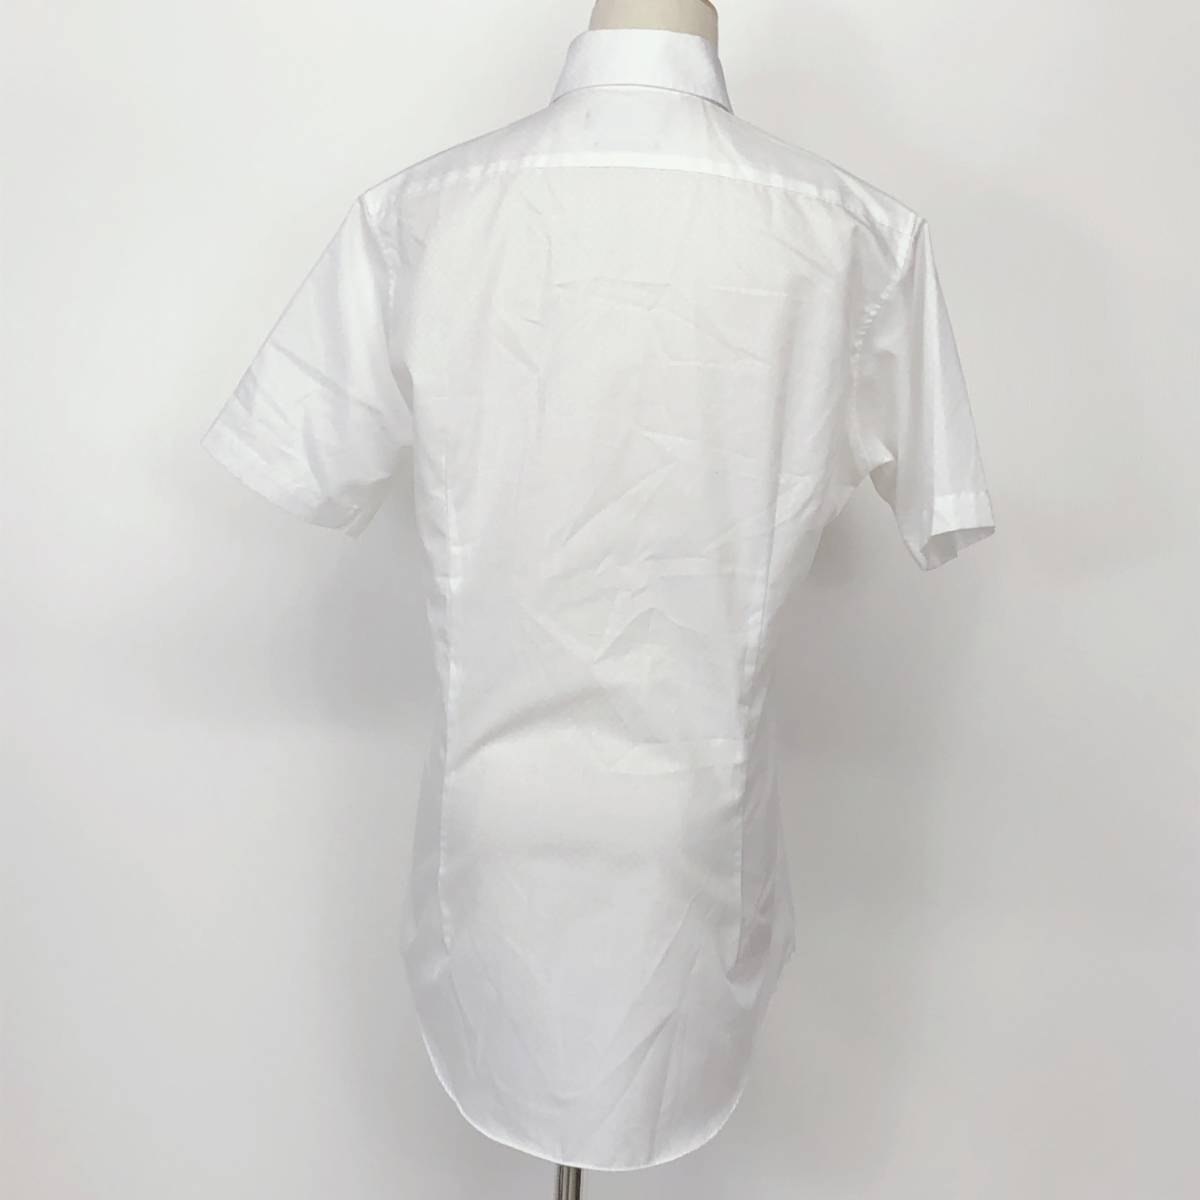 X348 hiromichinakano ヒロミチナカノ メンズ トップス シャツ 半袖 ホワイト 白 綿素材含 シンプル 上品 オフィススタイリッシュルックの画像3